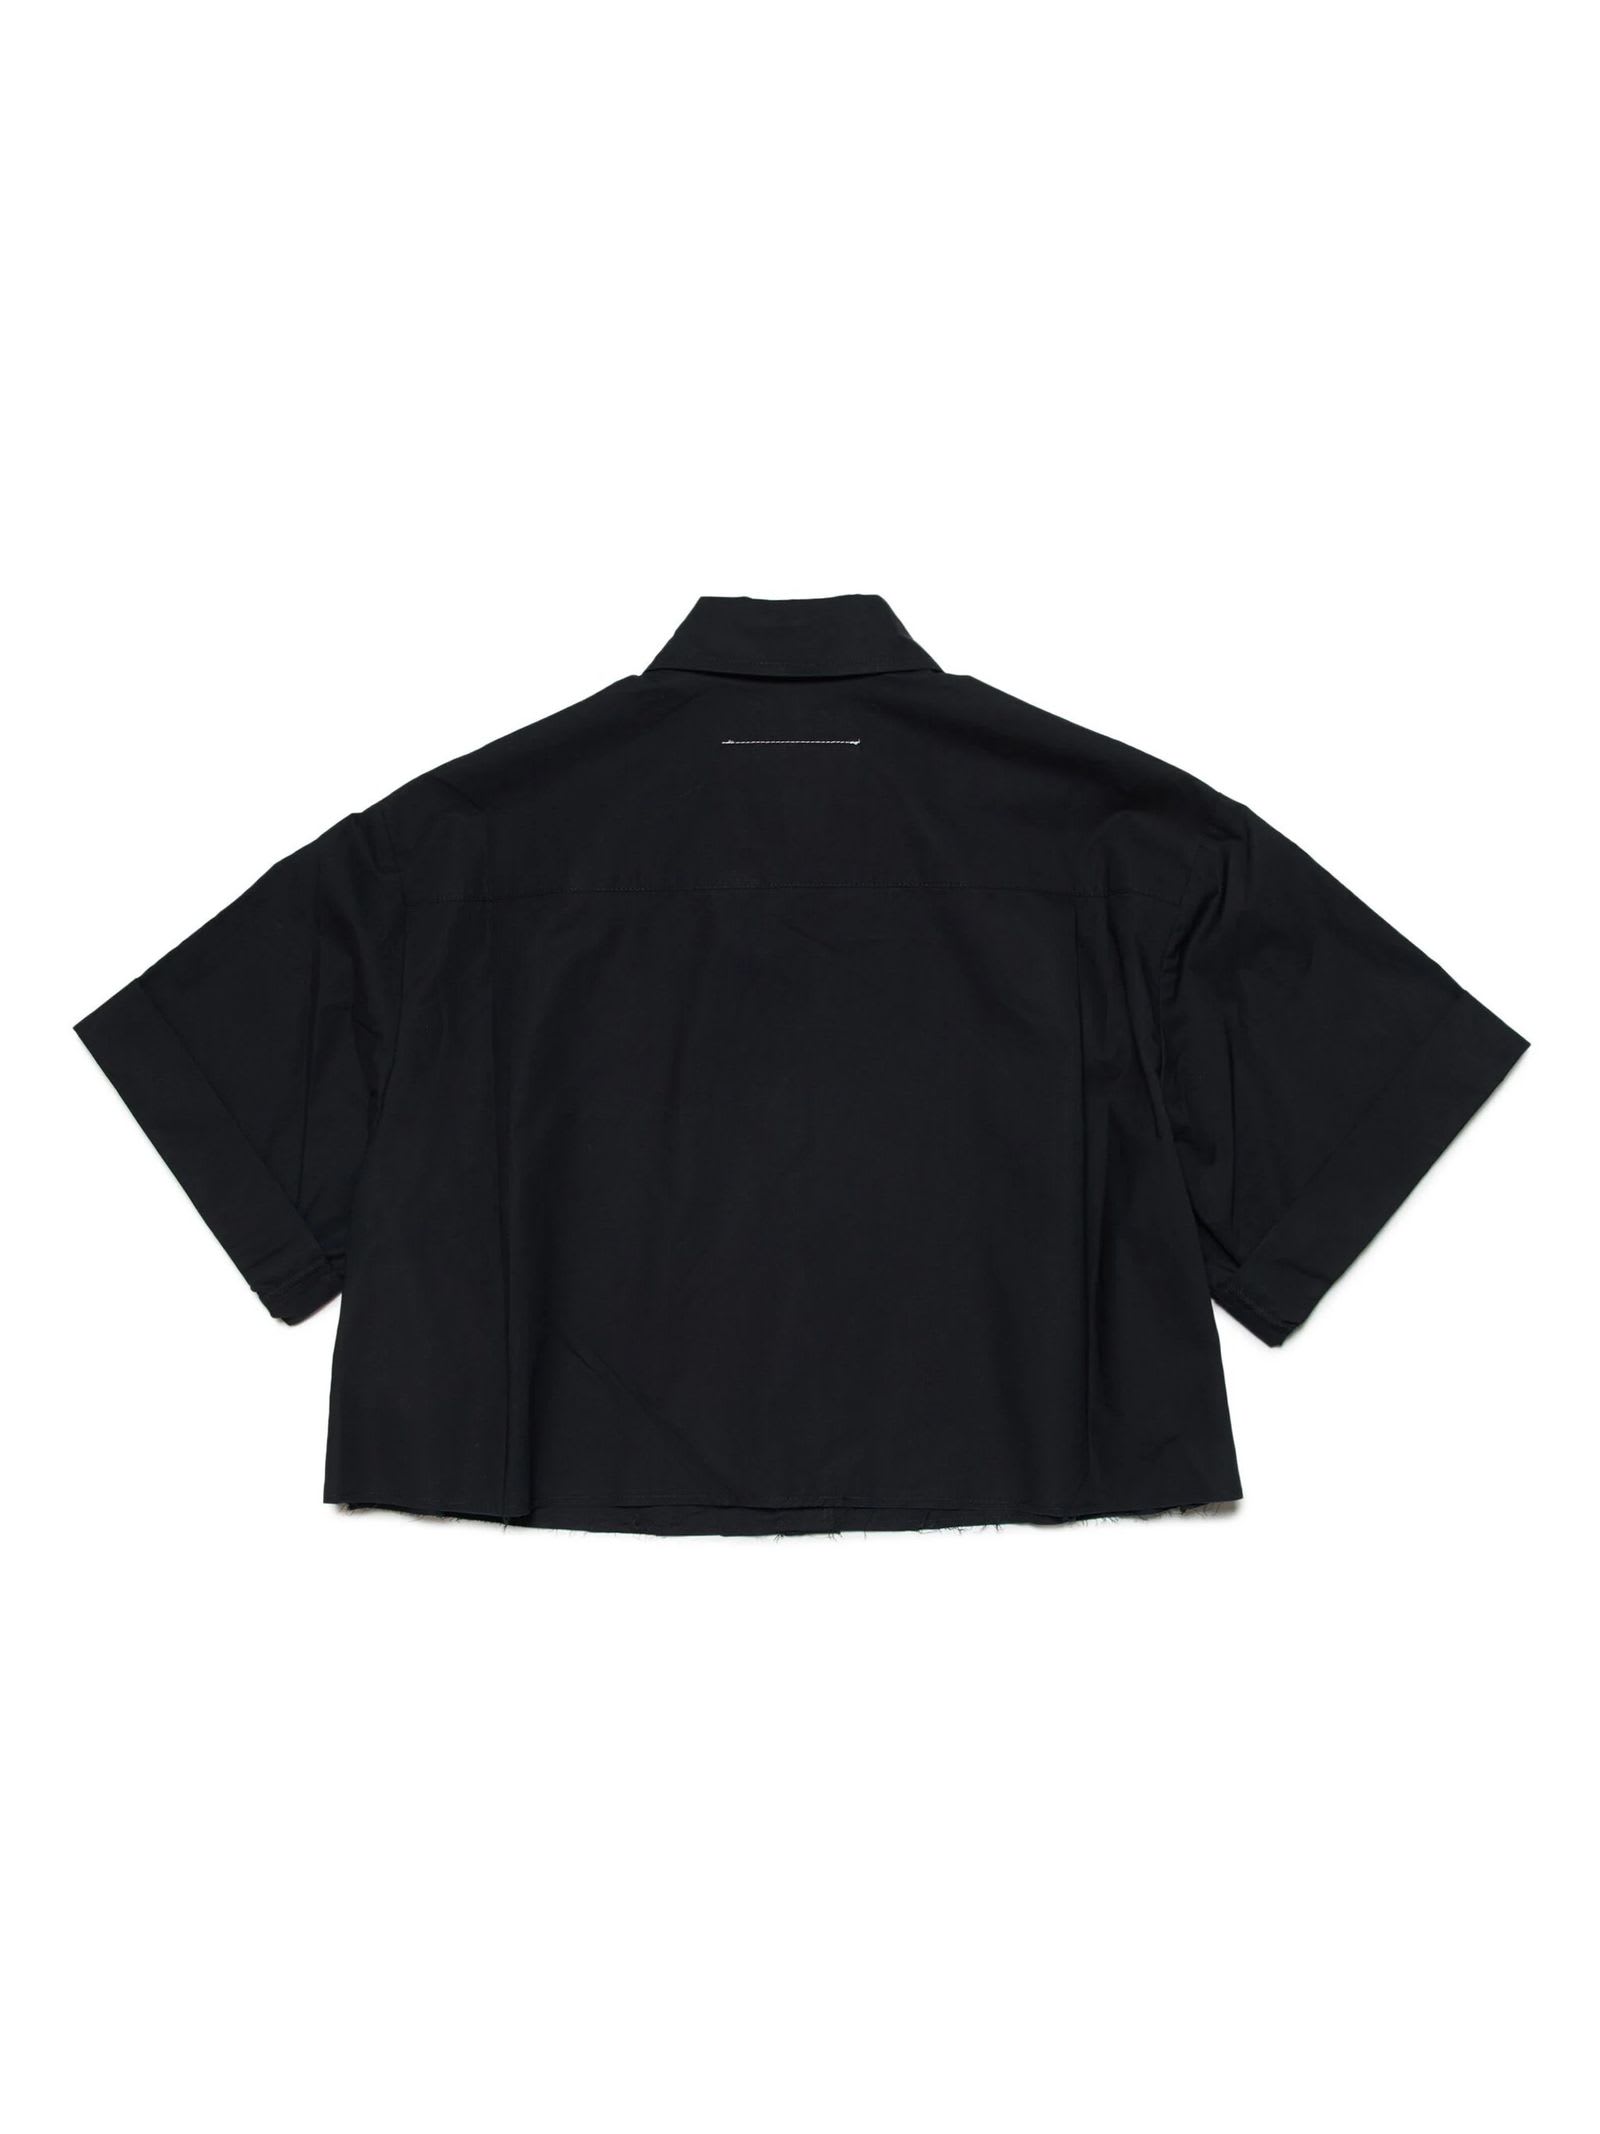 Shop Maison Margiela Shirts Black